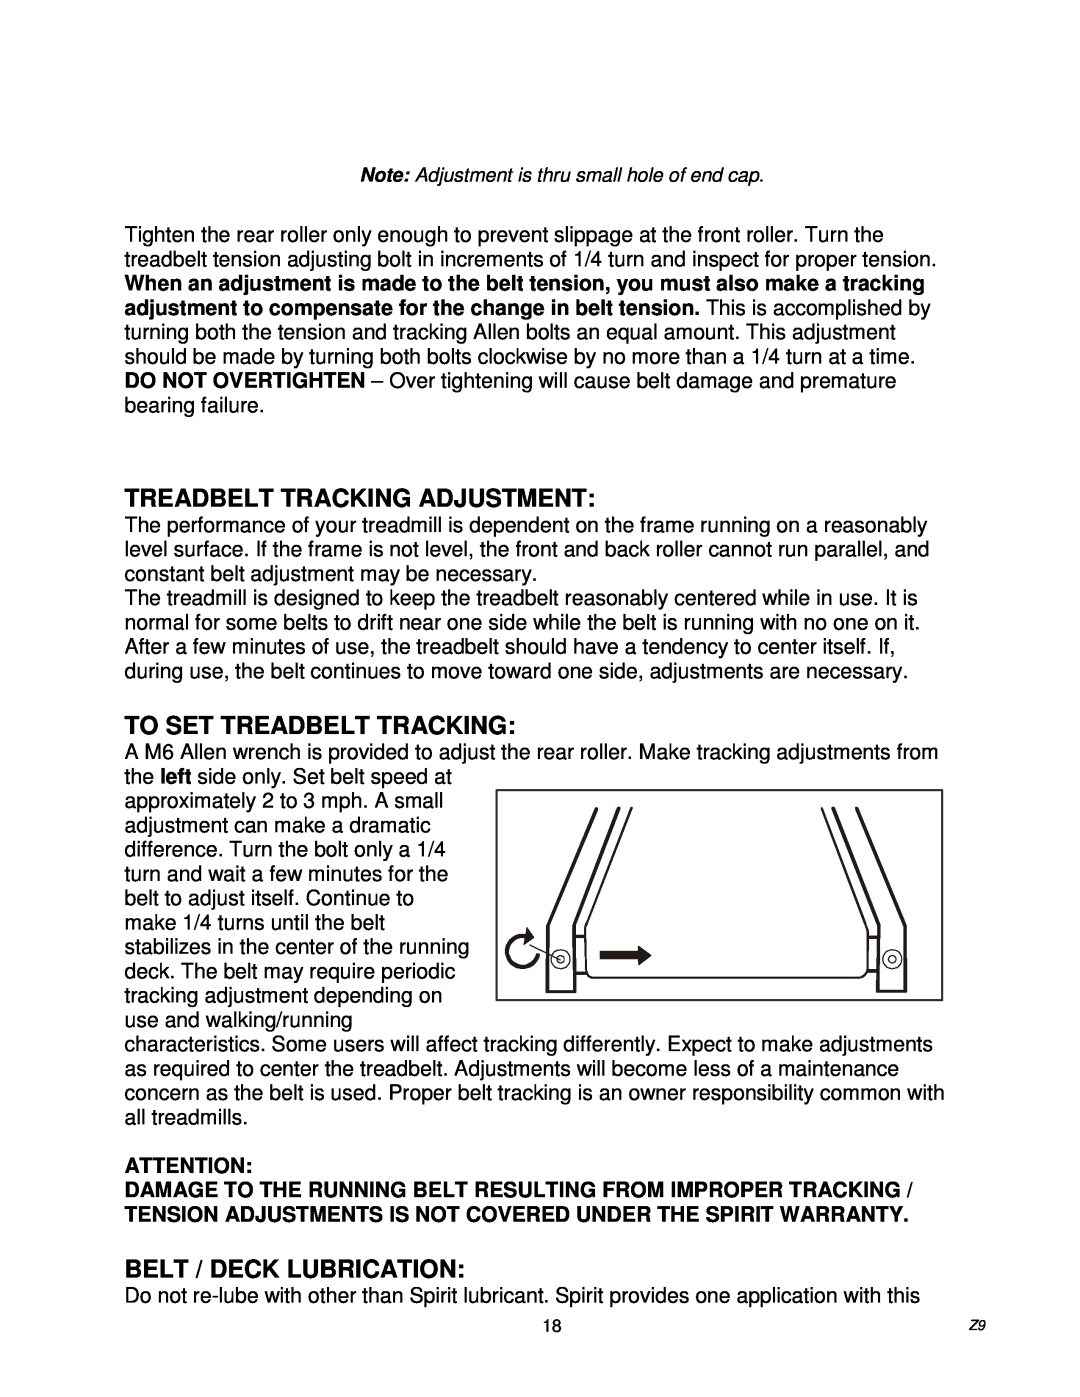 Spirit Z9 owner manual Treadbelt Tracking Adjustment, To Set Treadbelt Tracking, Belt / Deck Lubrication 